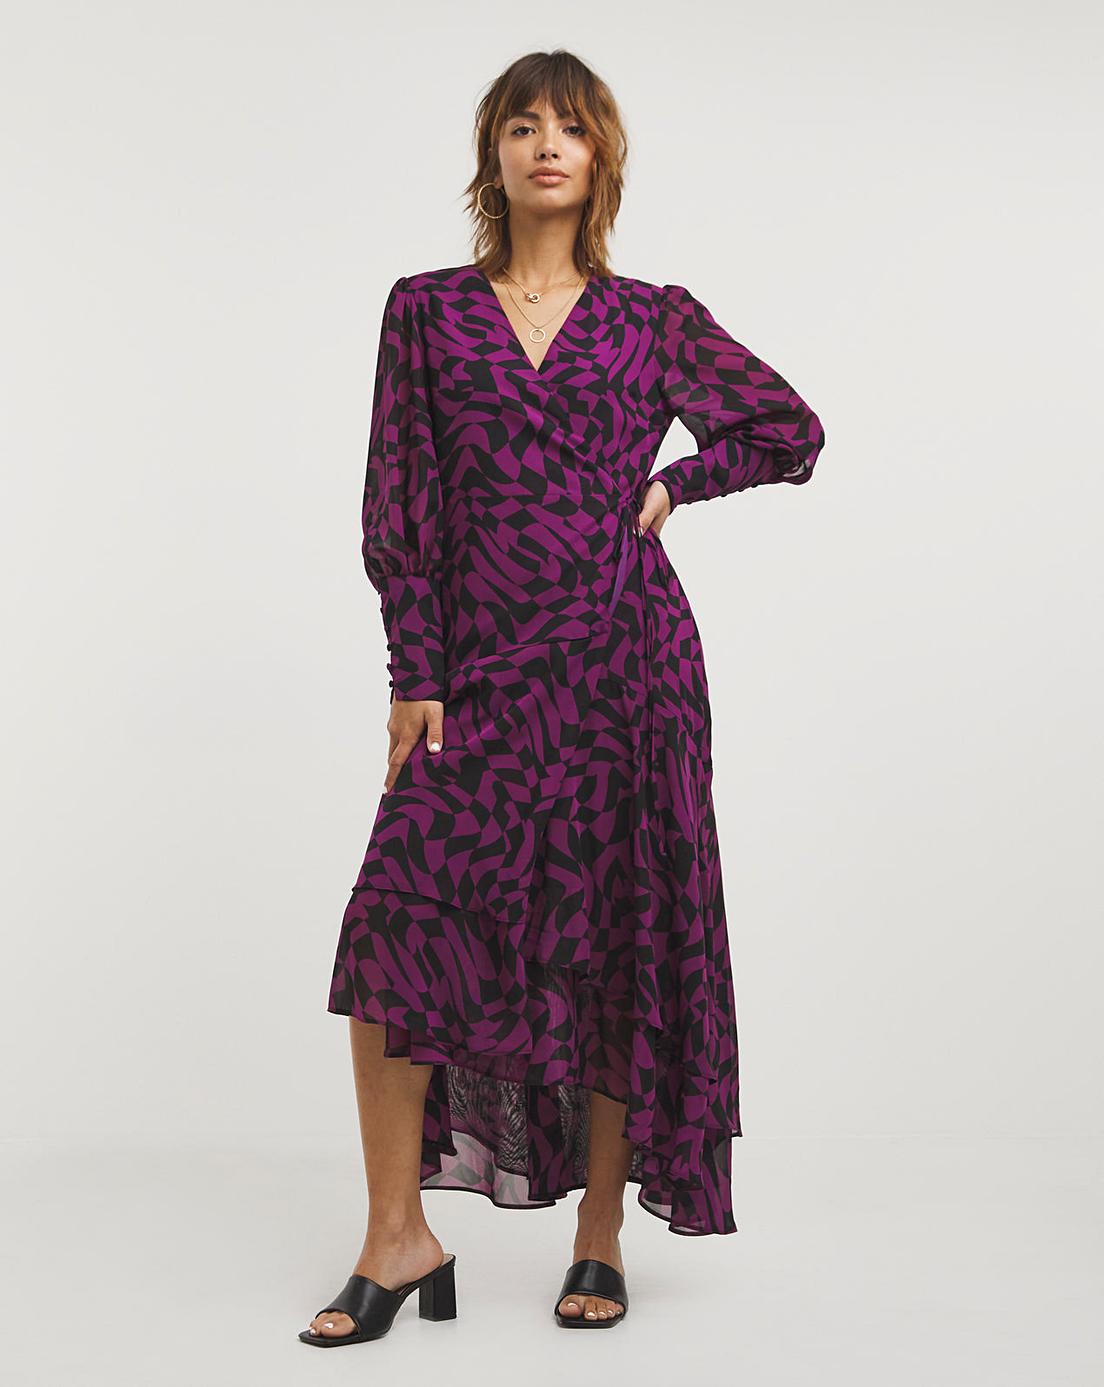 Joanna Hope Print Wrap Dress | Marisota